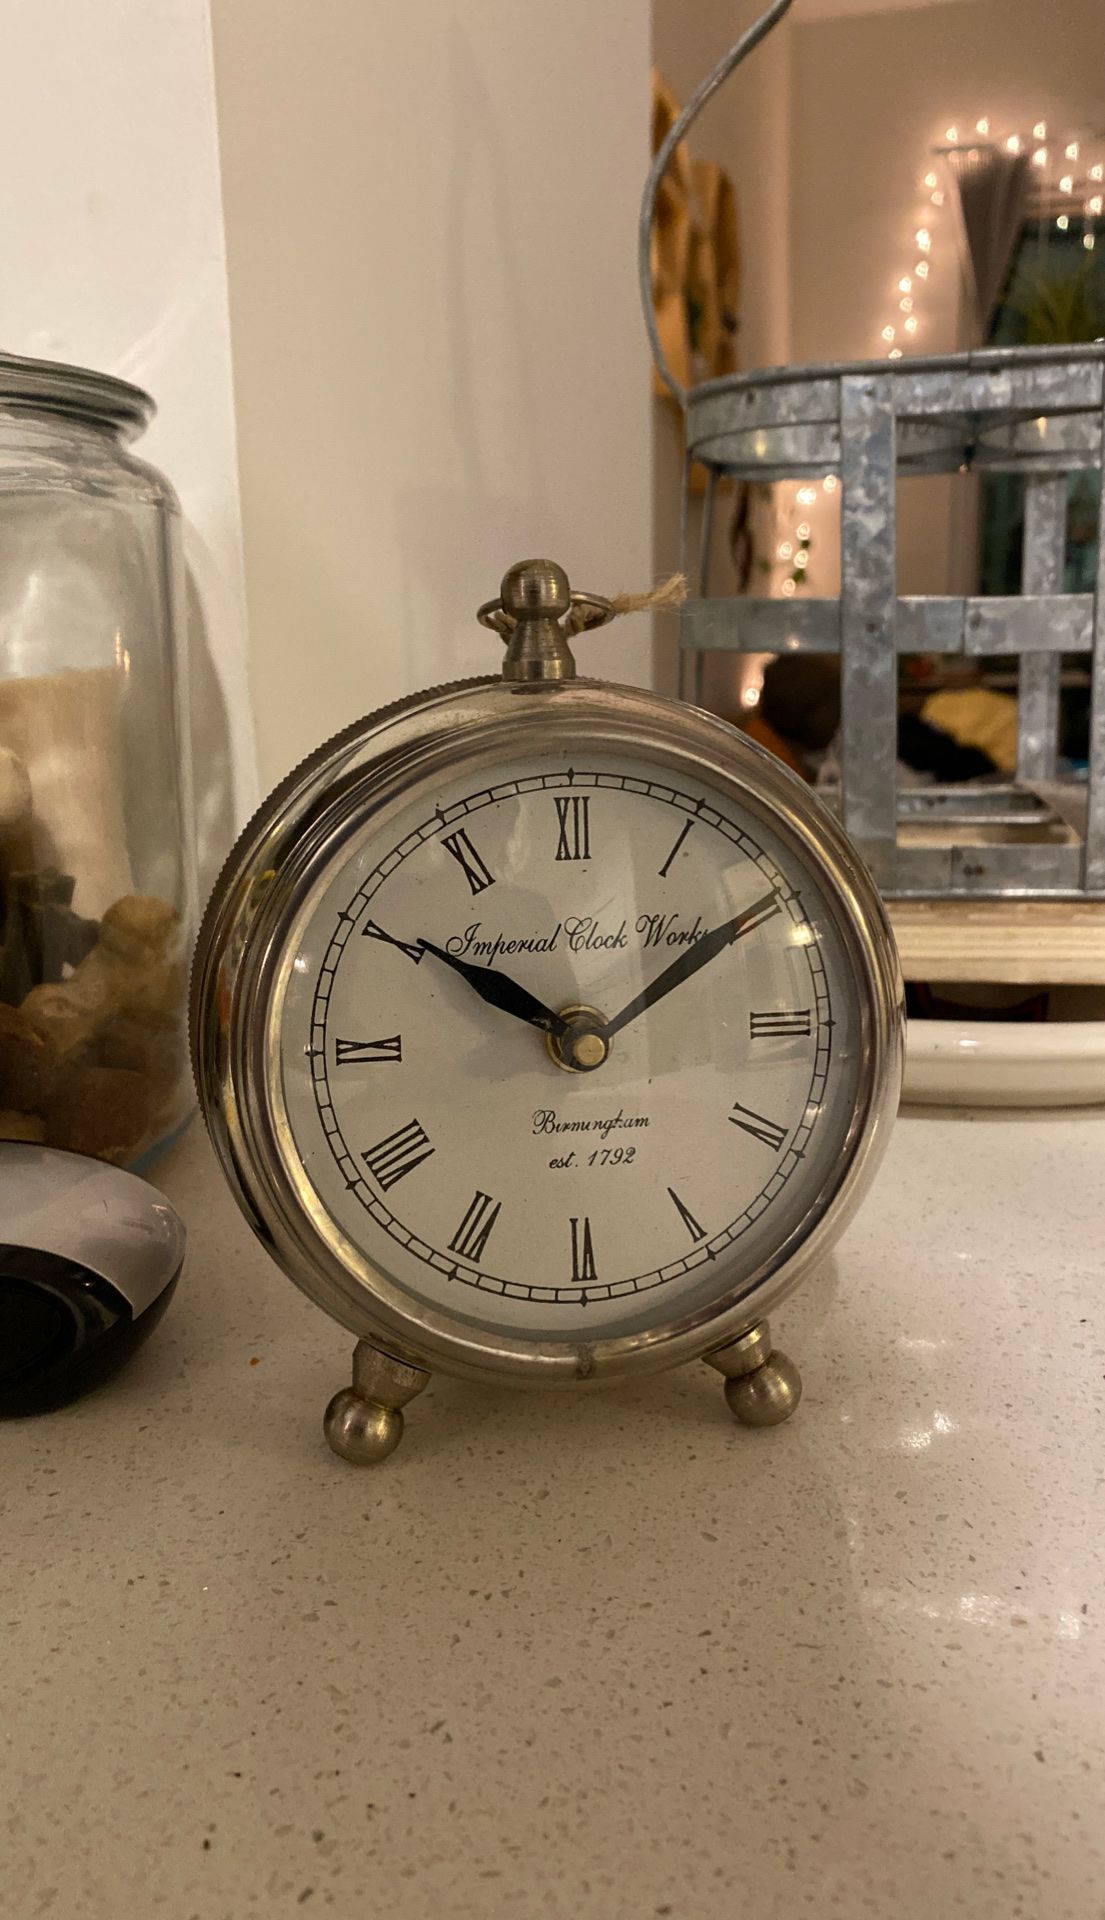 Small antique clock